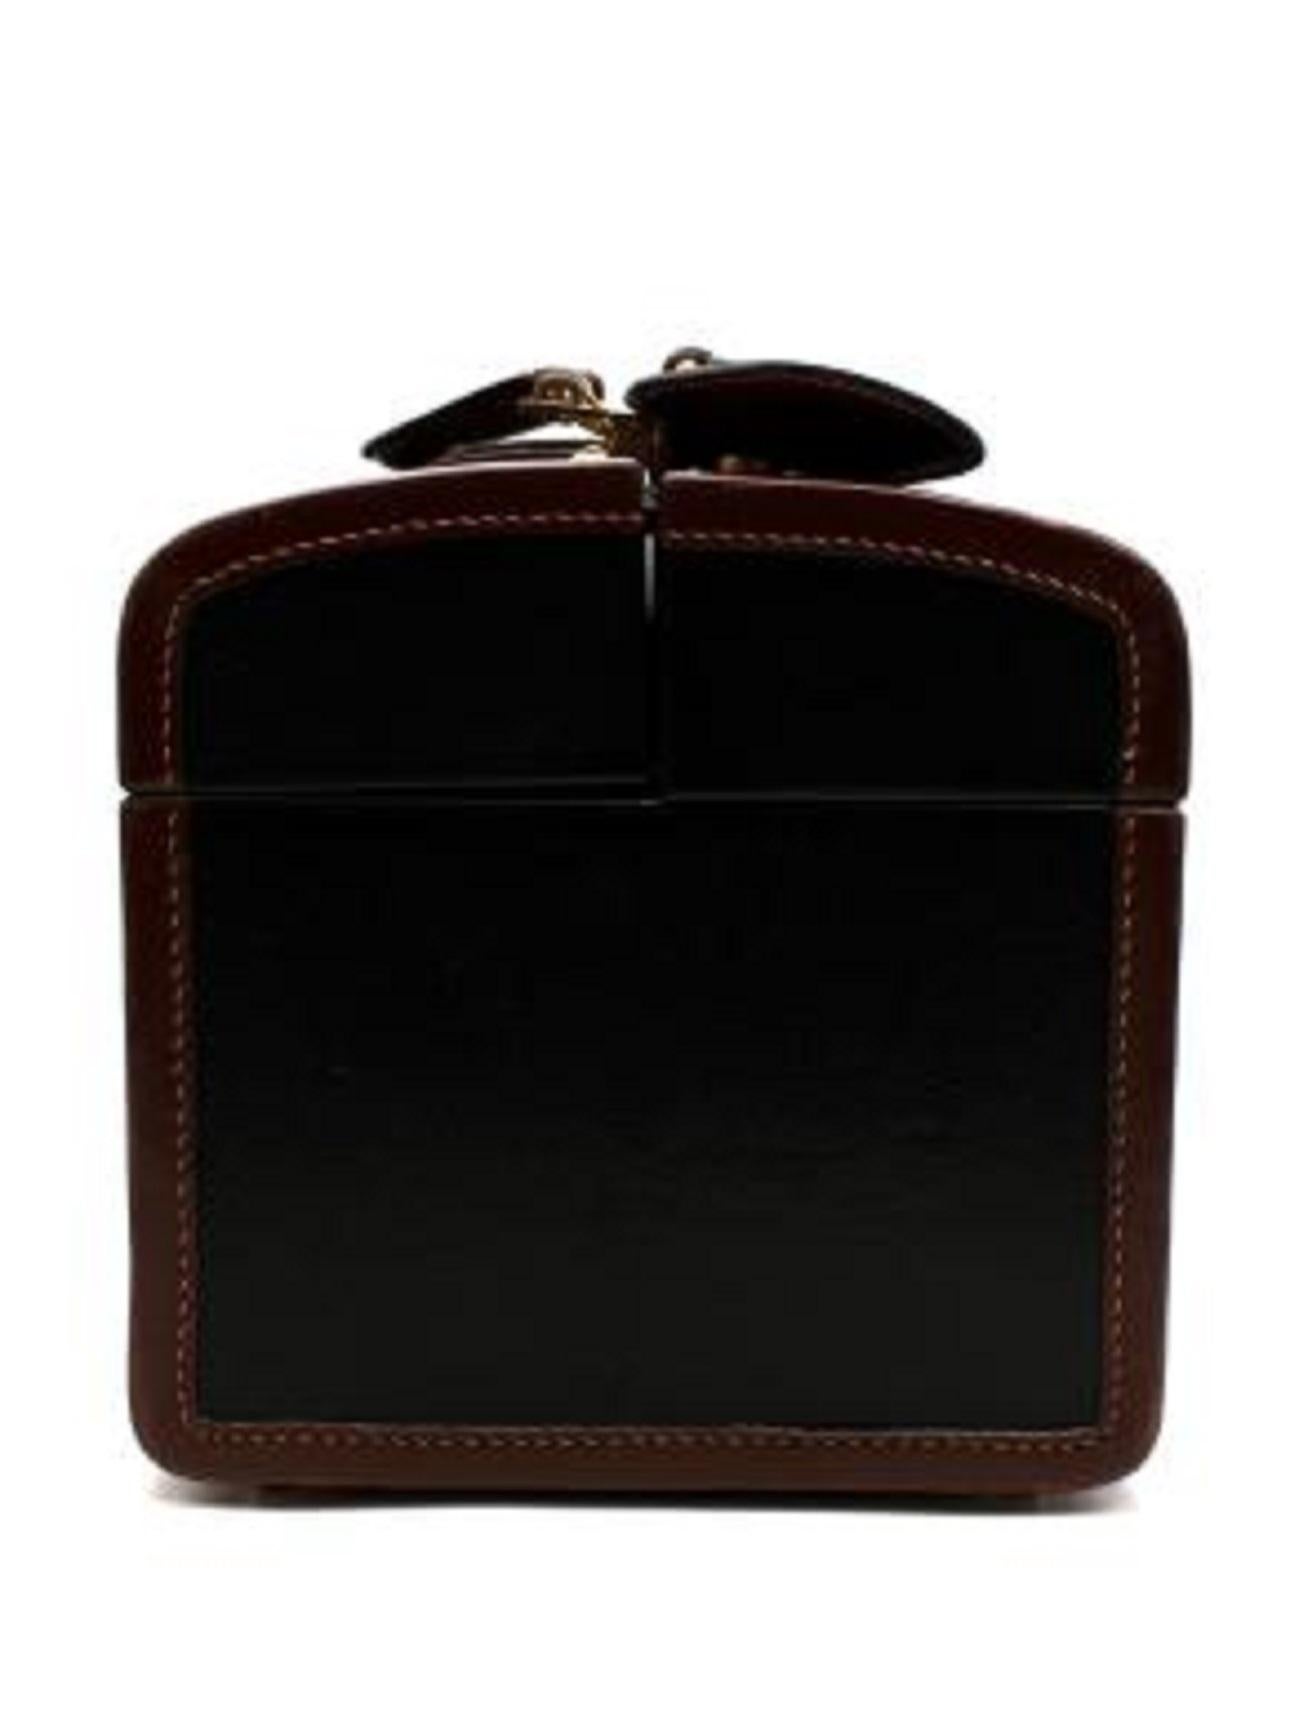 Women's Gucci Vintage Black & Tan Leather Vanity Box For Sale